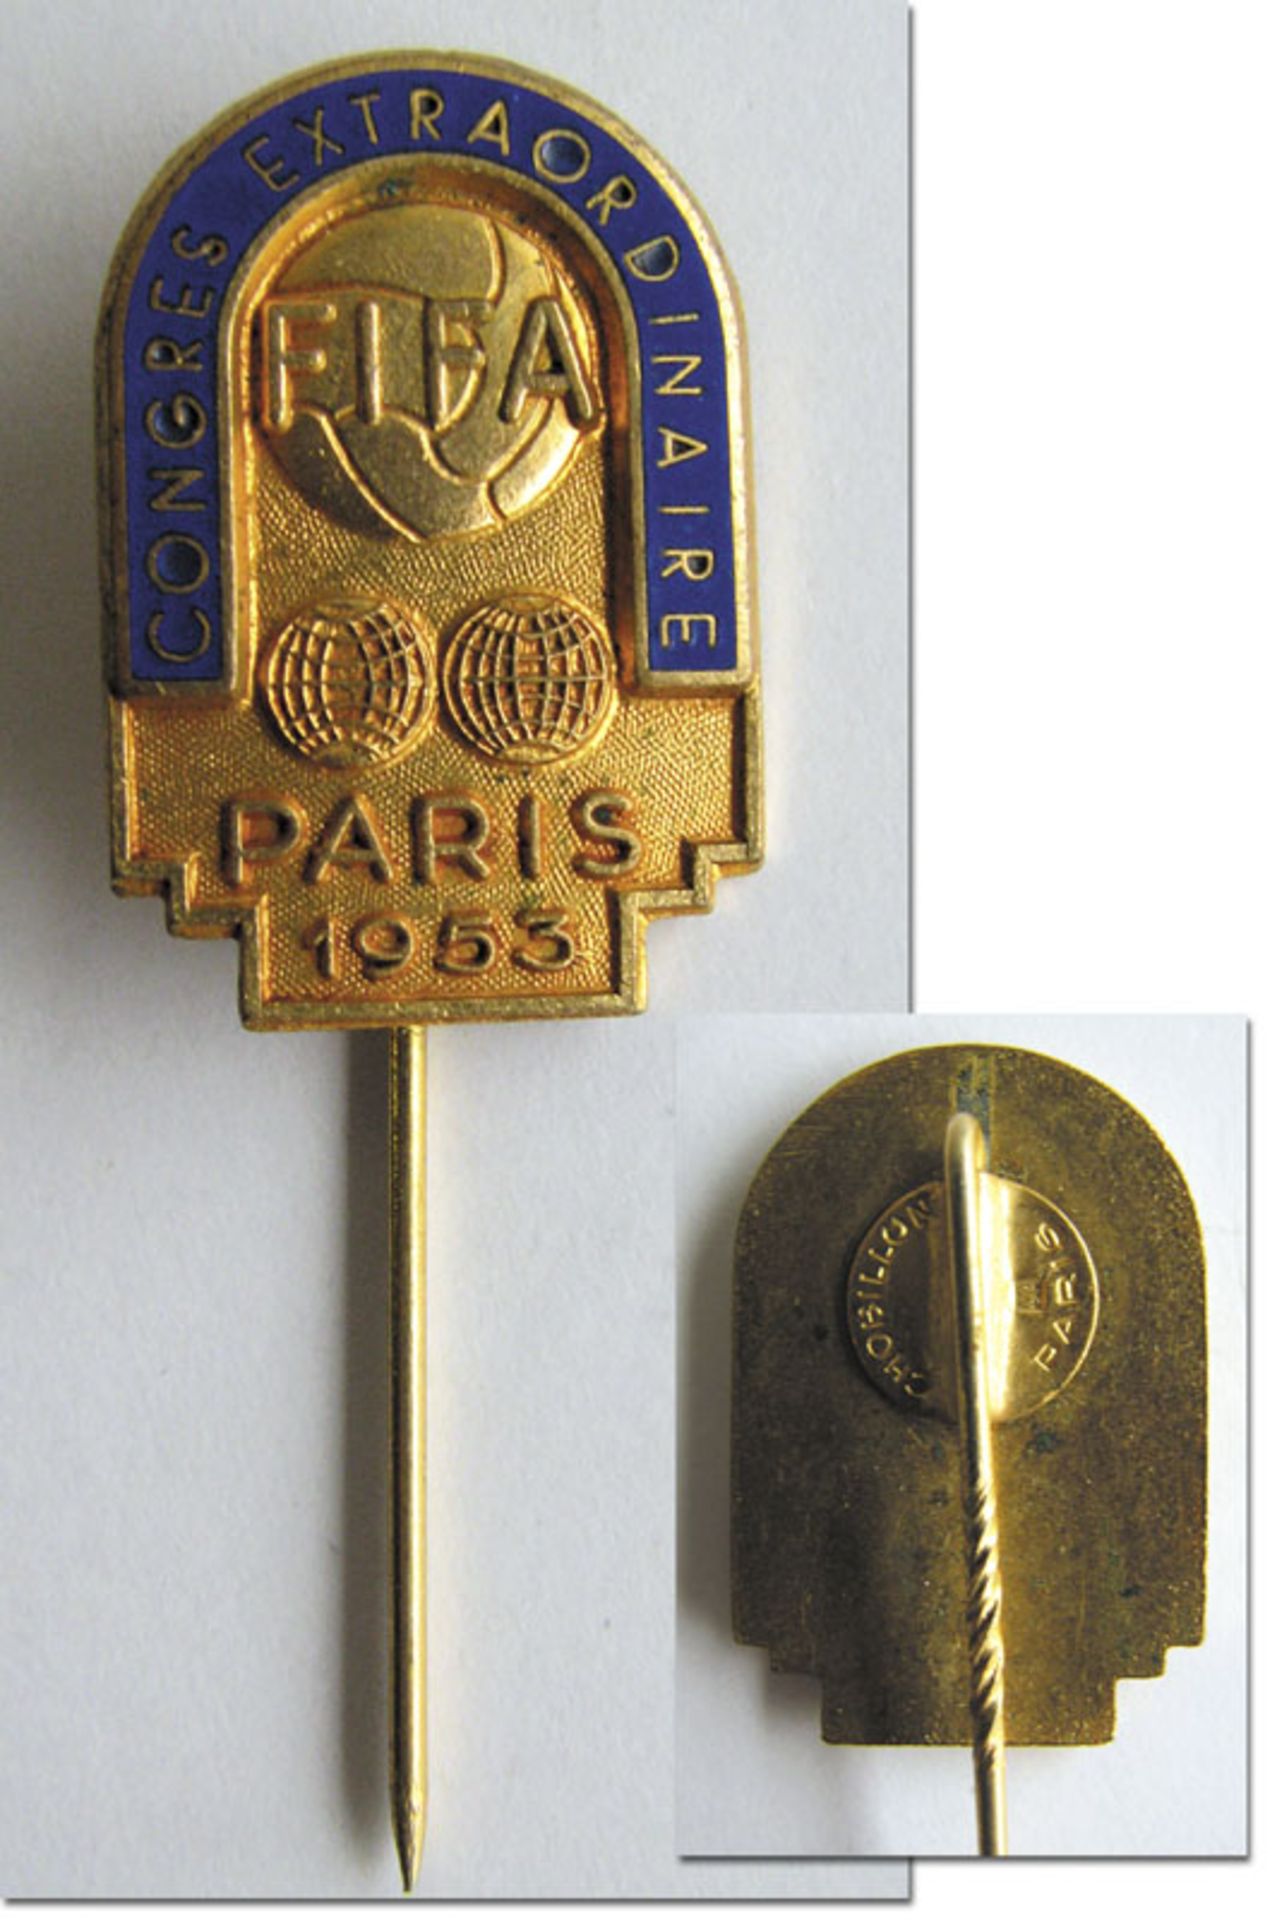 FIFA Congress Participation Badge Paris 1953 - "Congres Extraordinary FIFA Paris 1953", Bronze, gilt